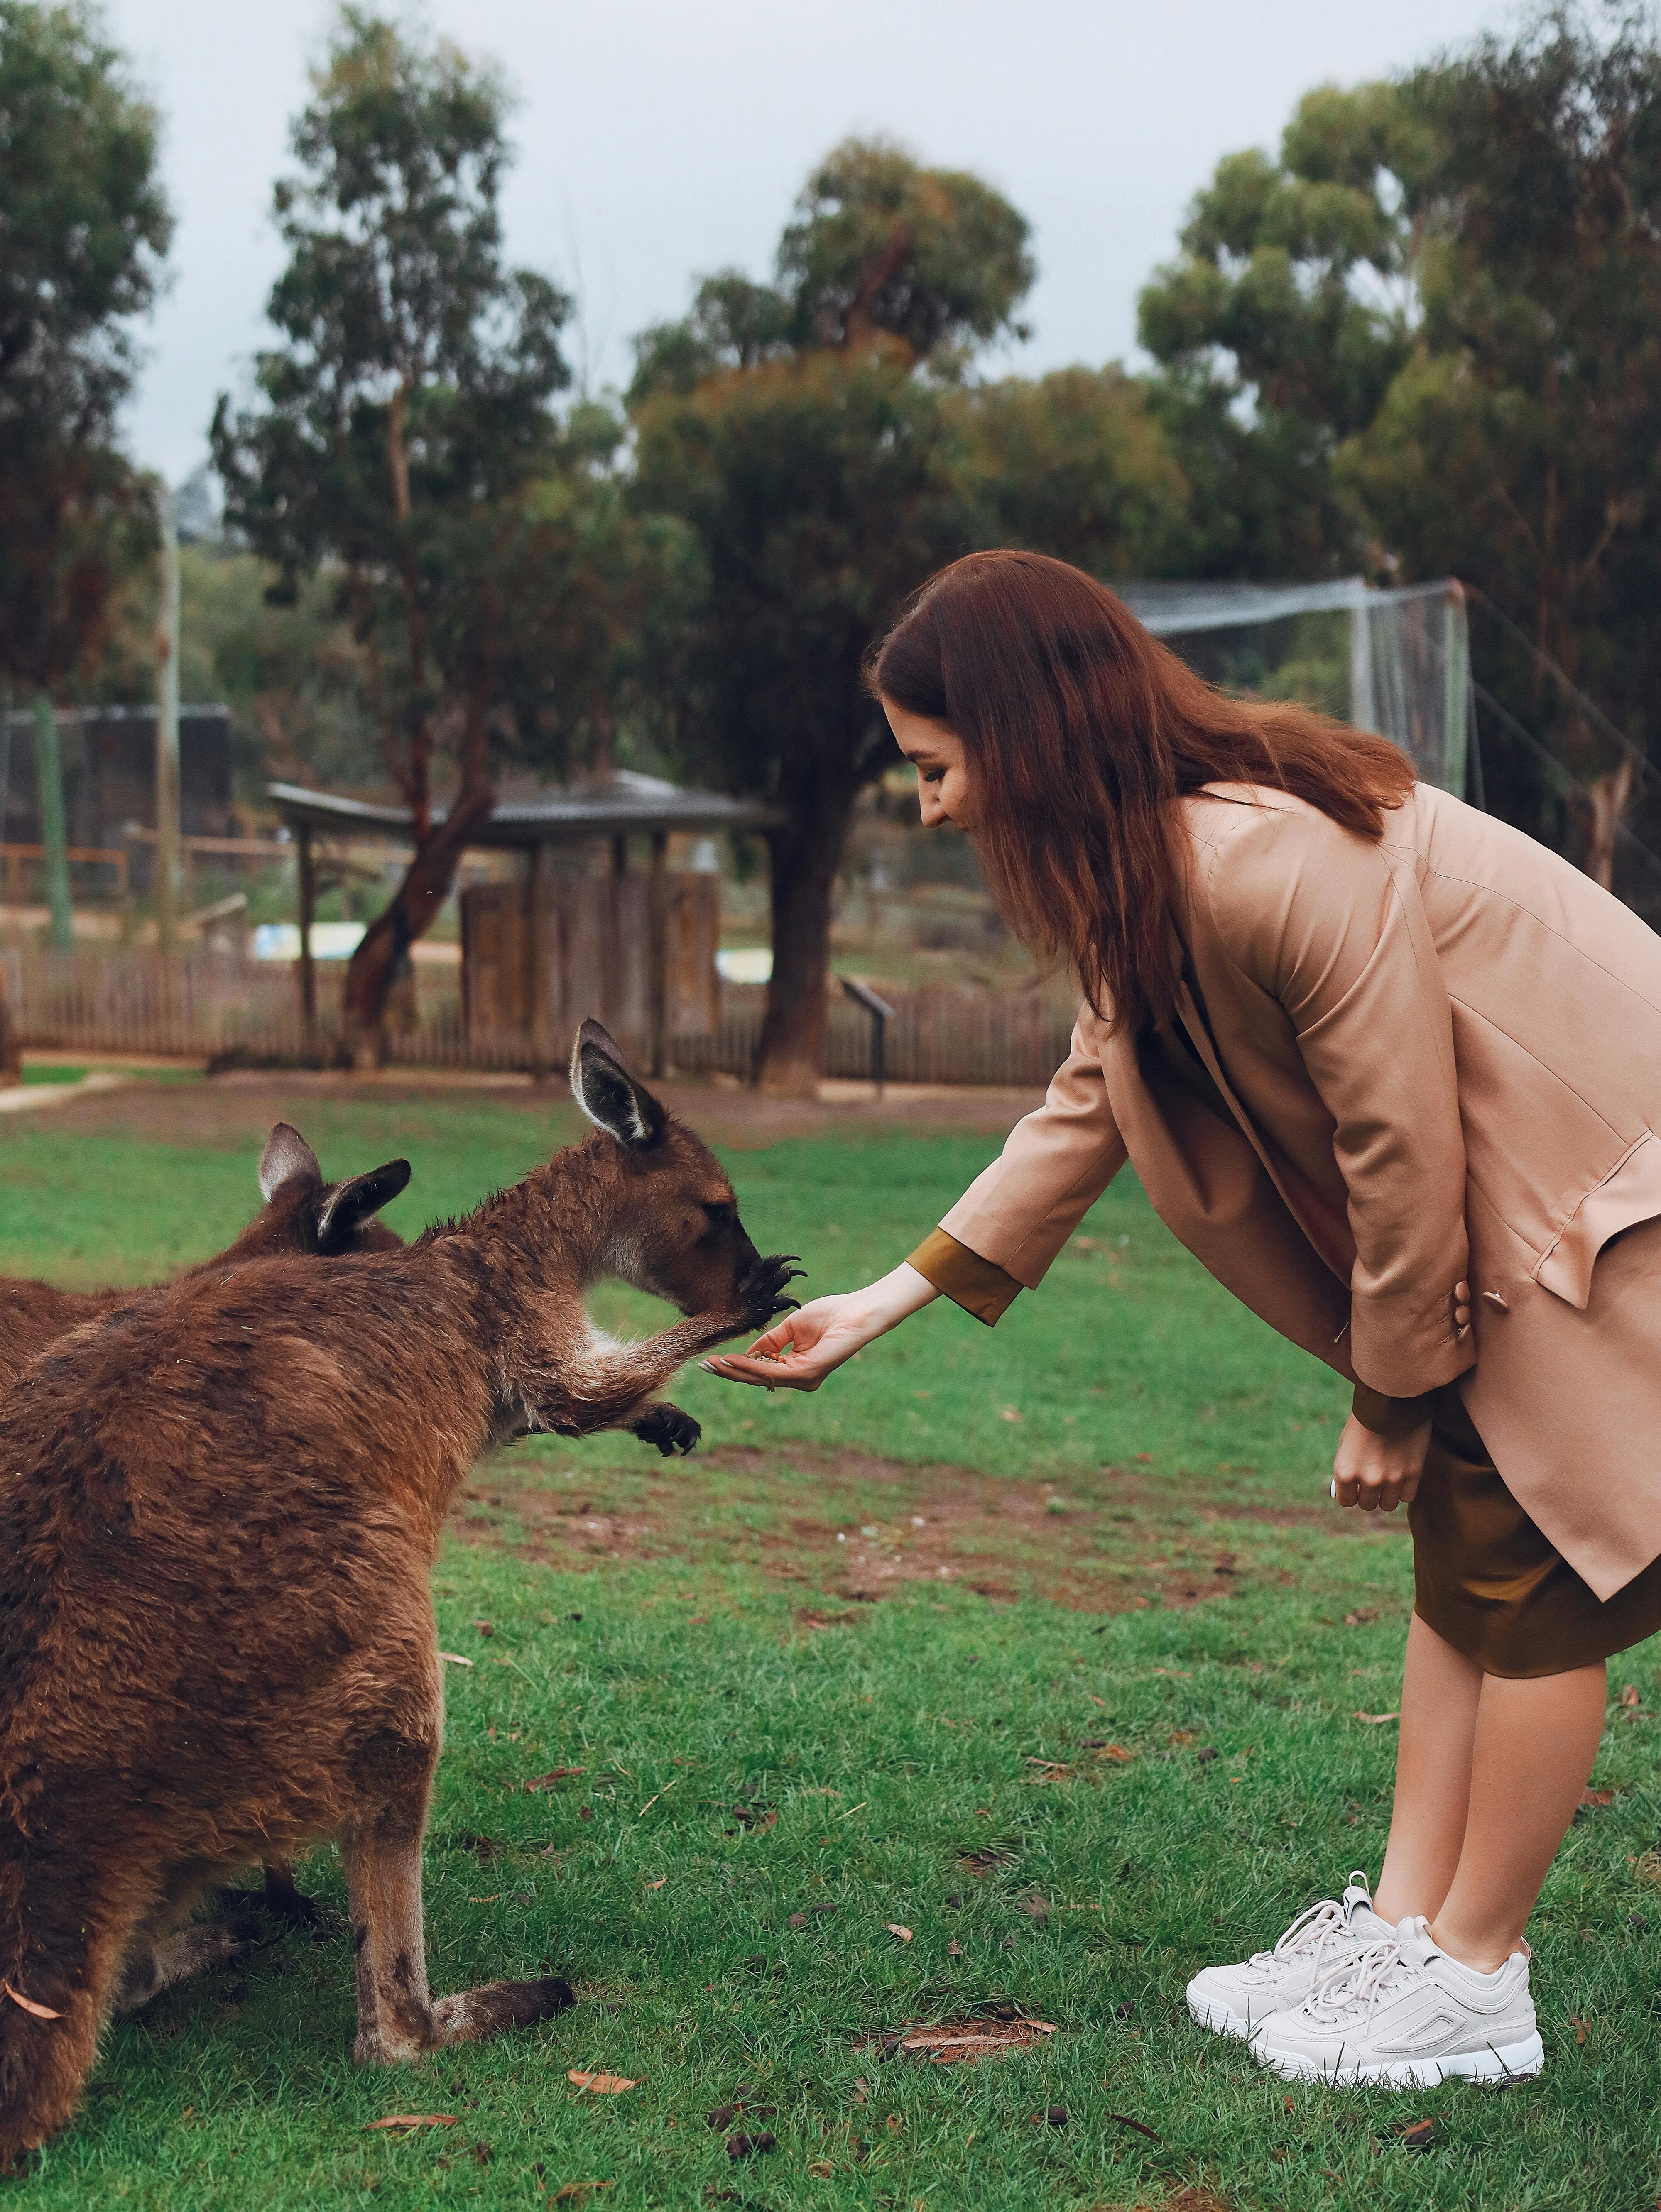 Woman bending and feeding funny kangaroo · Free Stock Photo